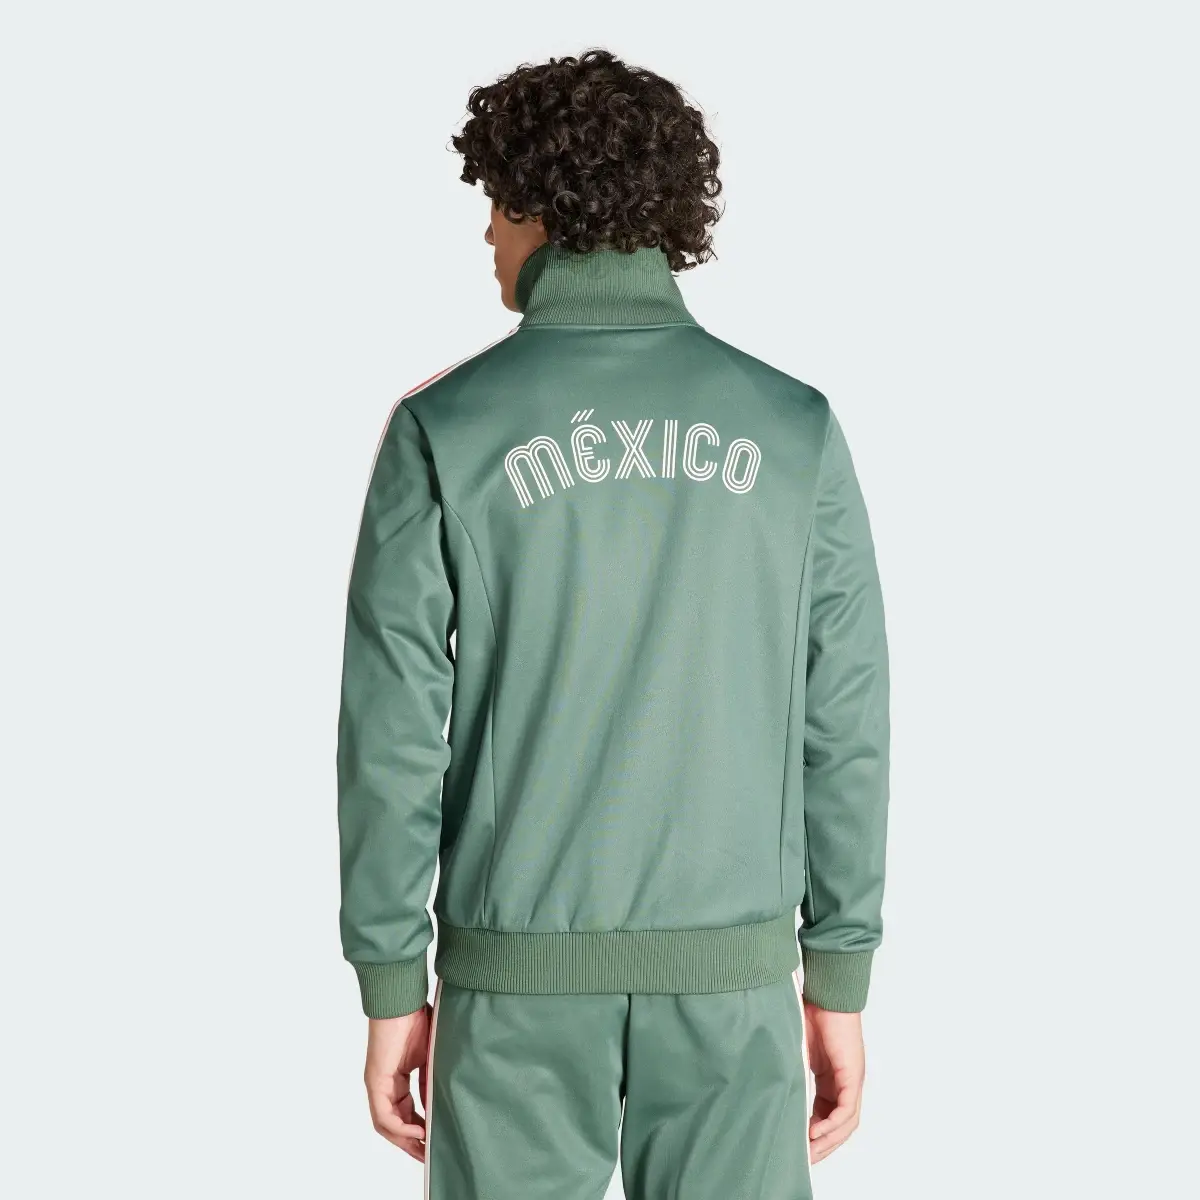 Adidas Mexico Beckenbauer Track Top. 3